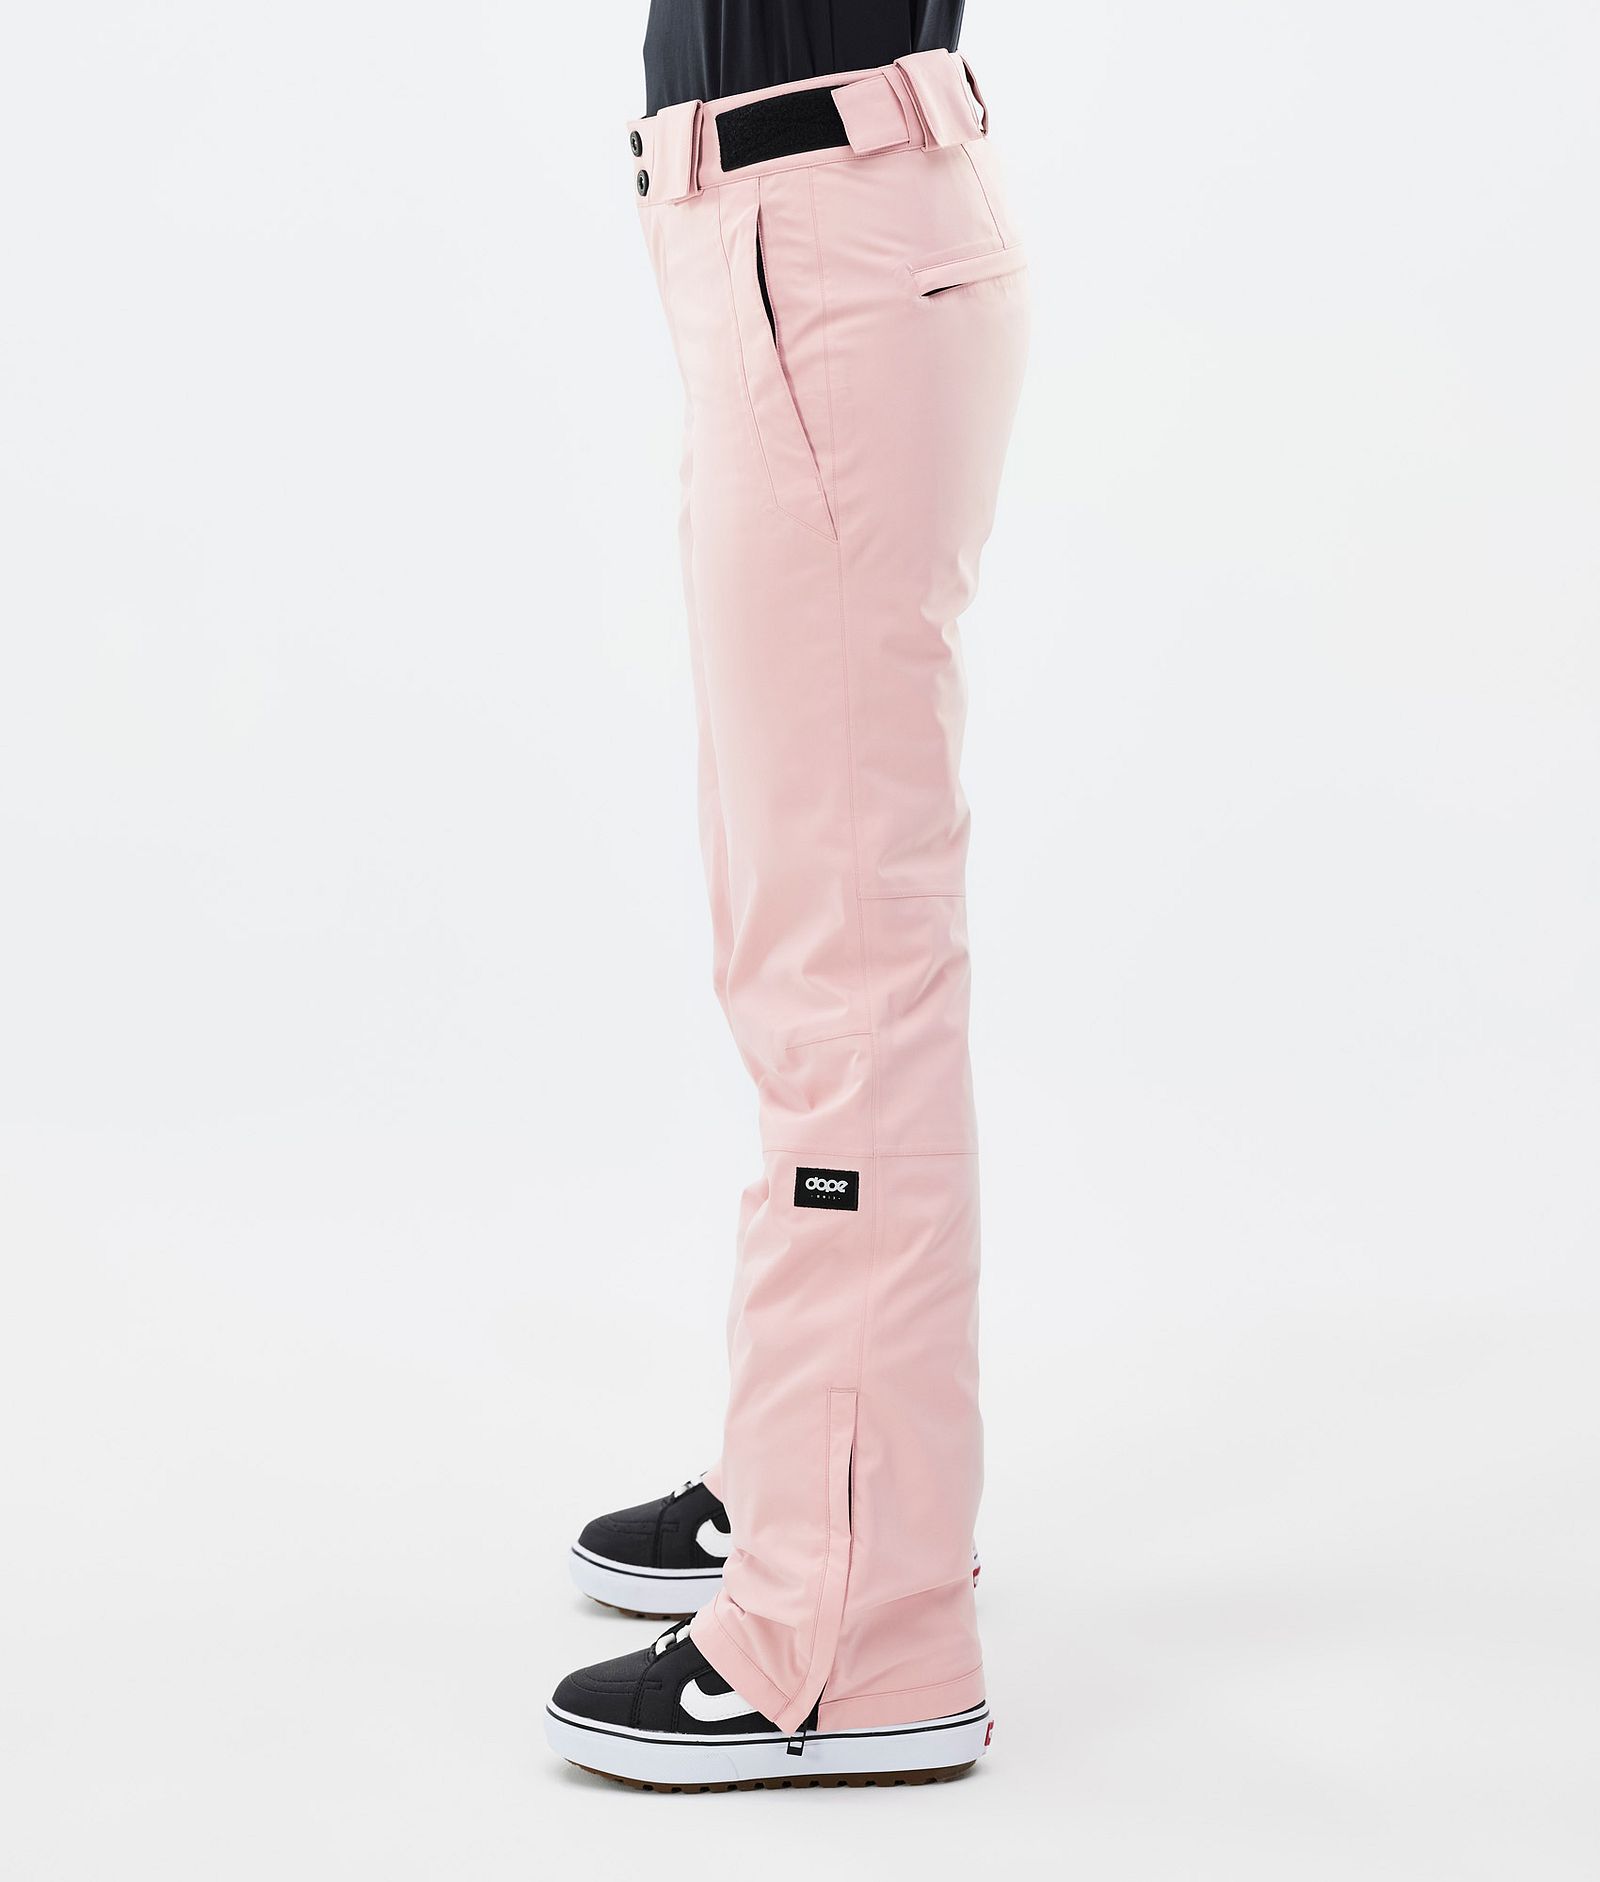 Con W Pantalones Snowboard Mujer Soft Pink Renewed, Imagen 3 de 6